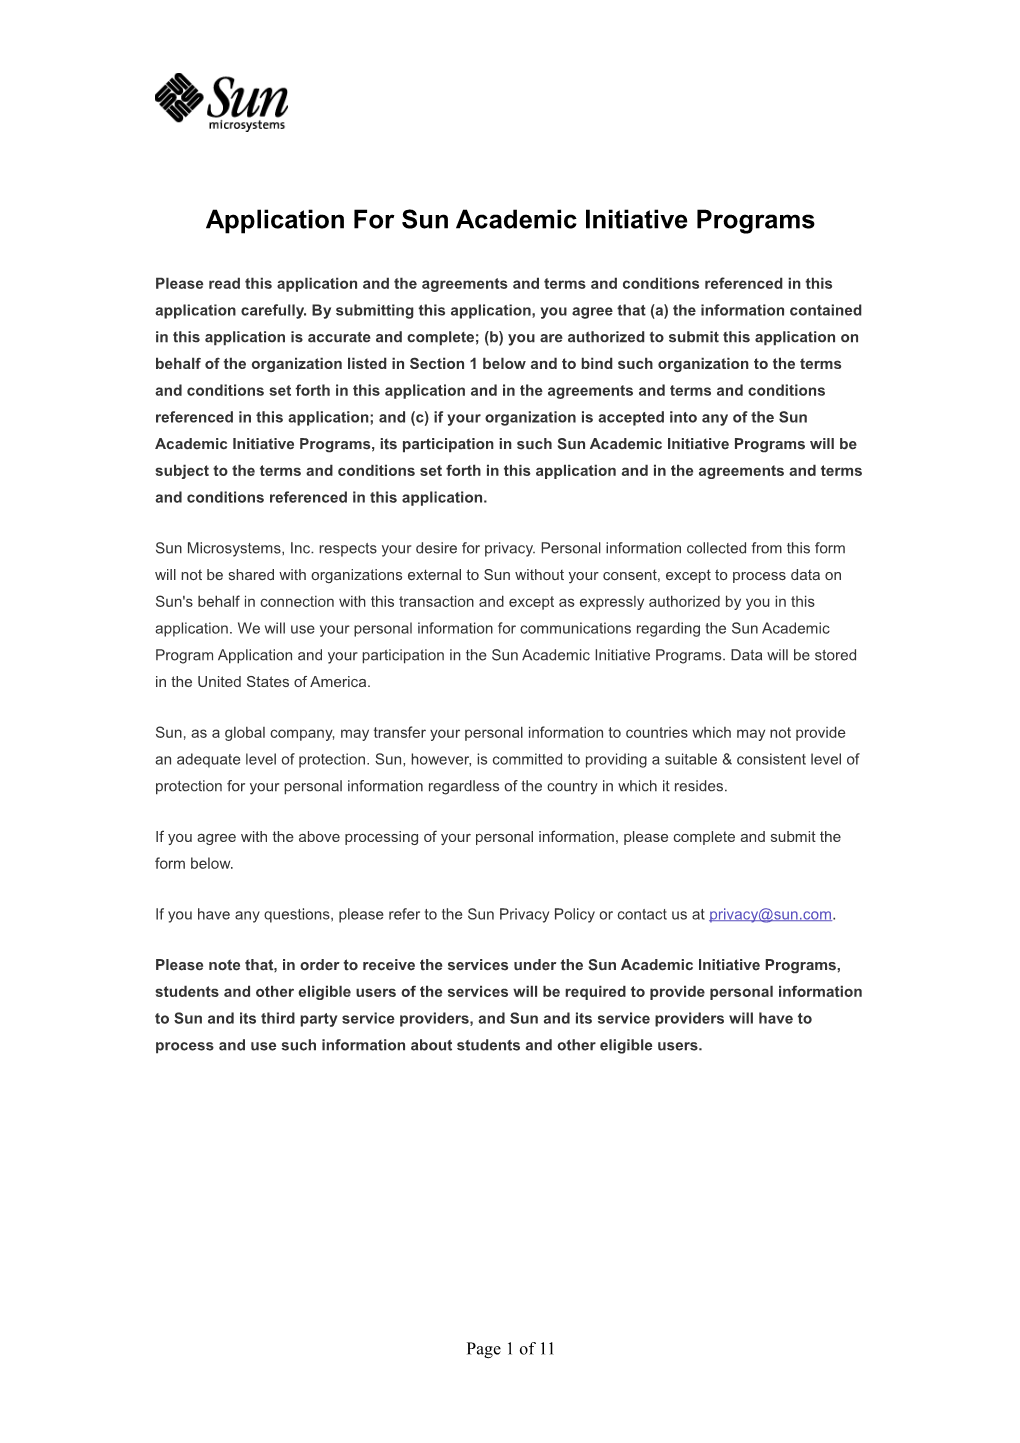 Application for Sun Academic Initiative Programs